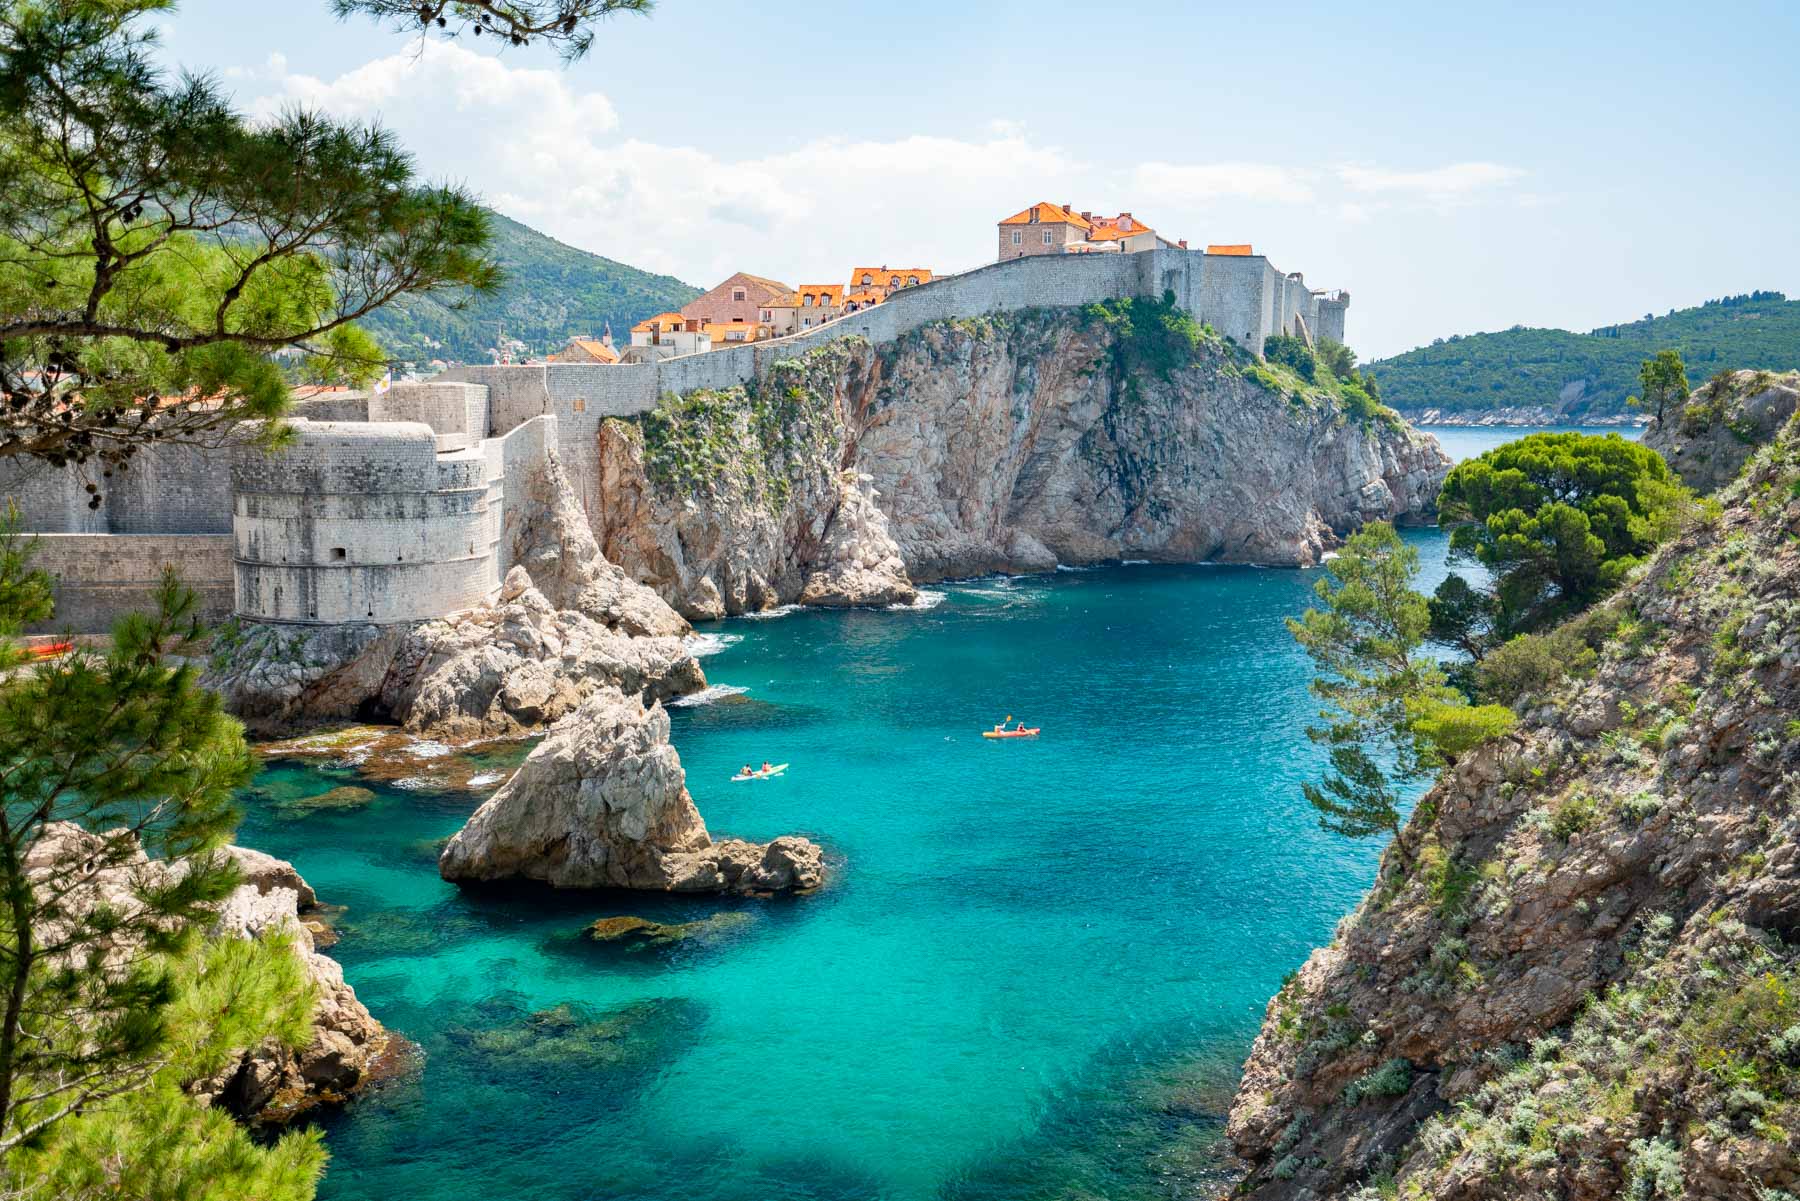 A walled cliff in Croatia